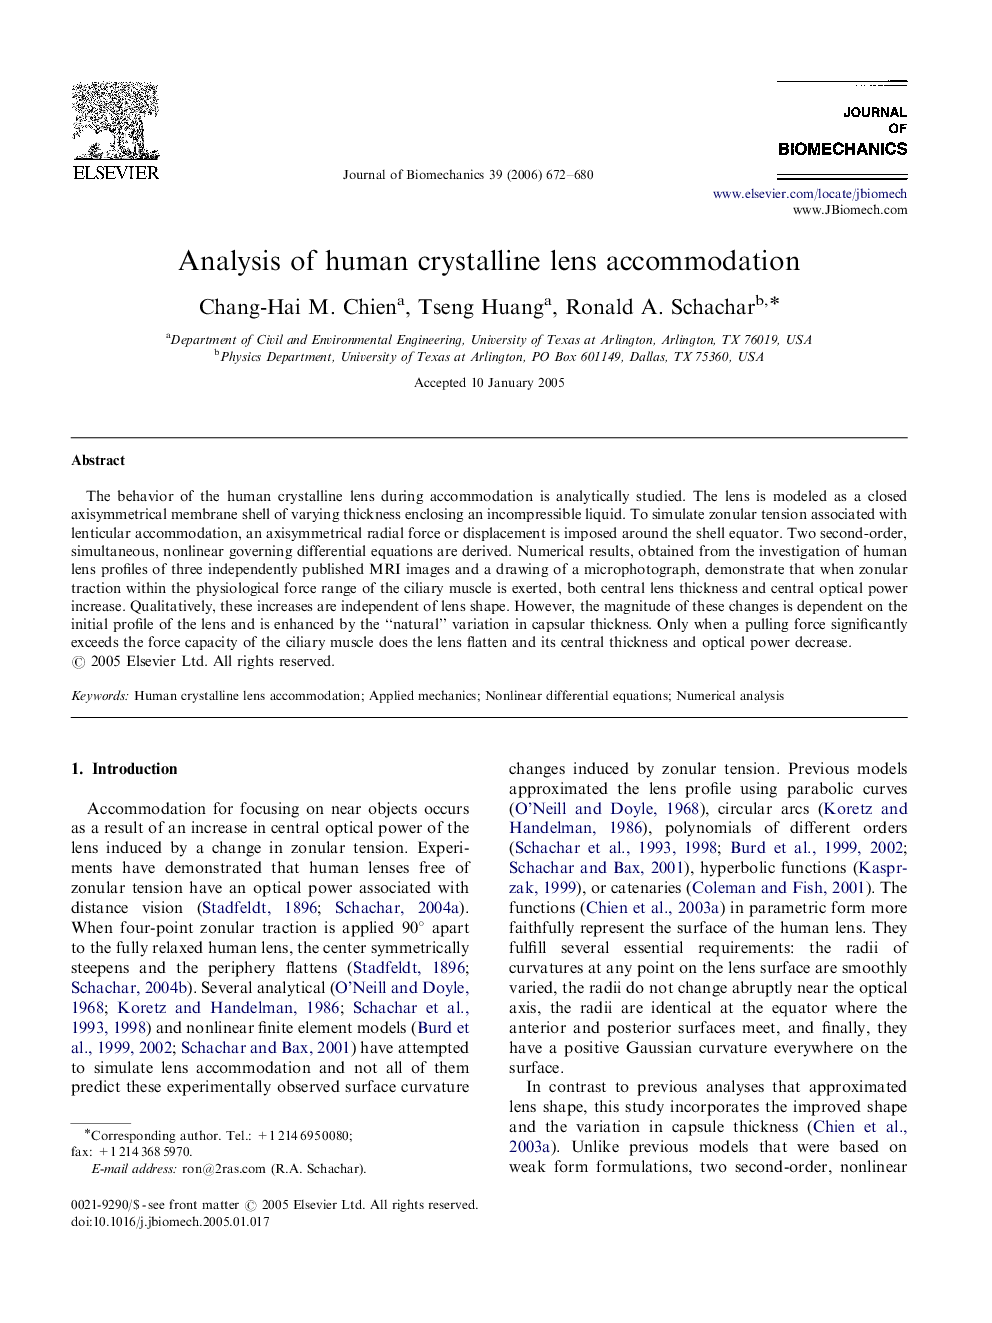 Analysis of human crystalline lens accommodation